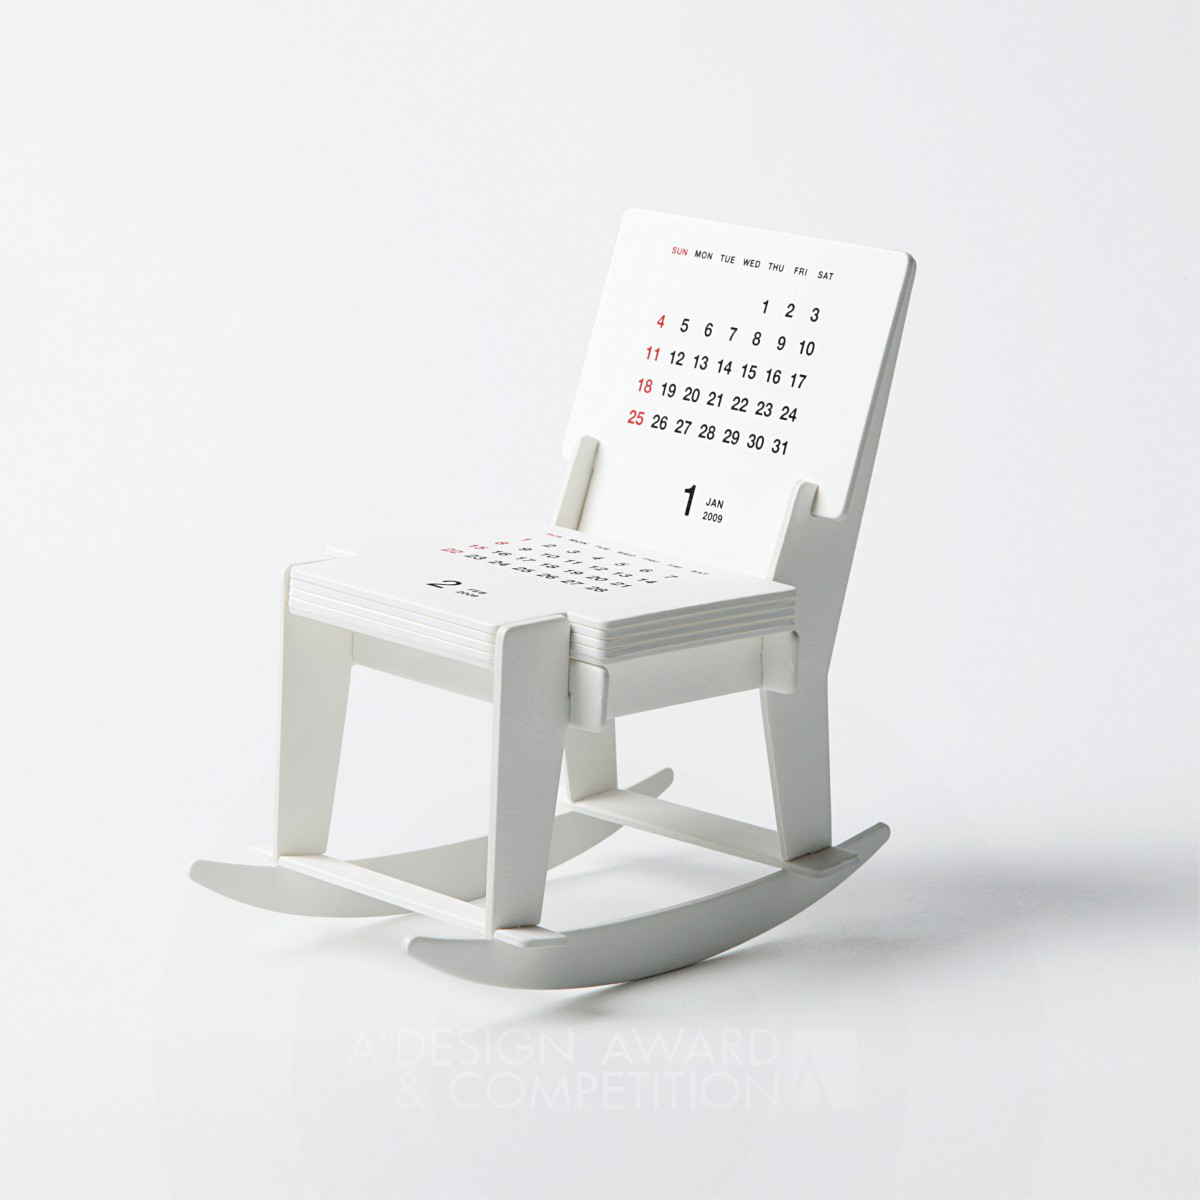 calendar 2013 “Rocking Chair” Calendar by Katsumi Tamura